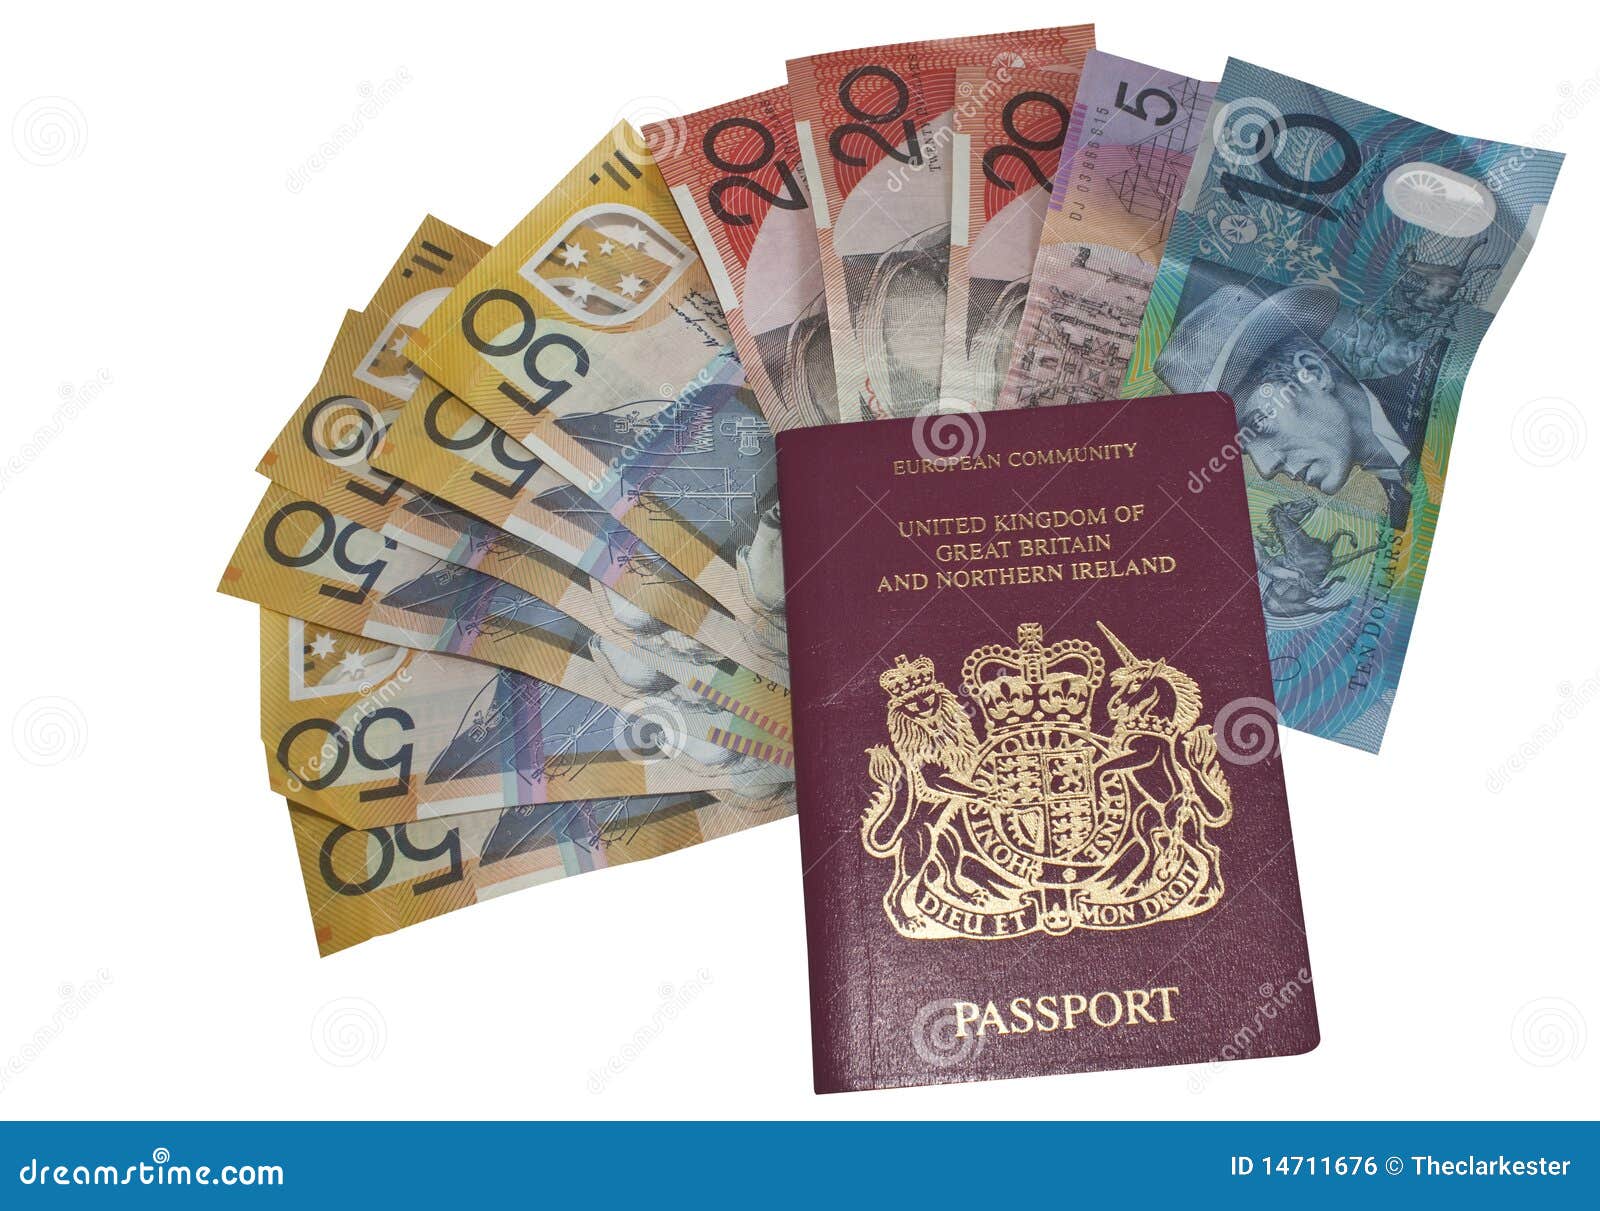 A British Passport Full Of Euros Stock Photo Image Of Financial